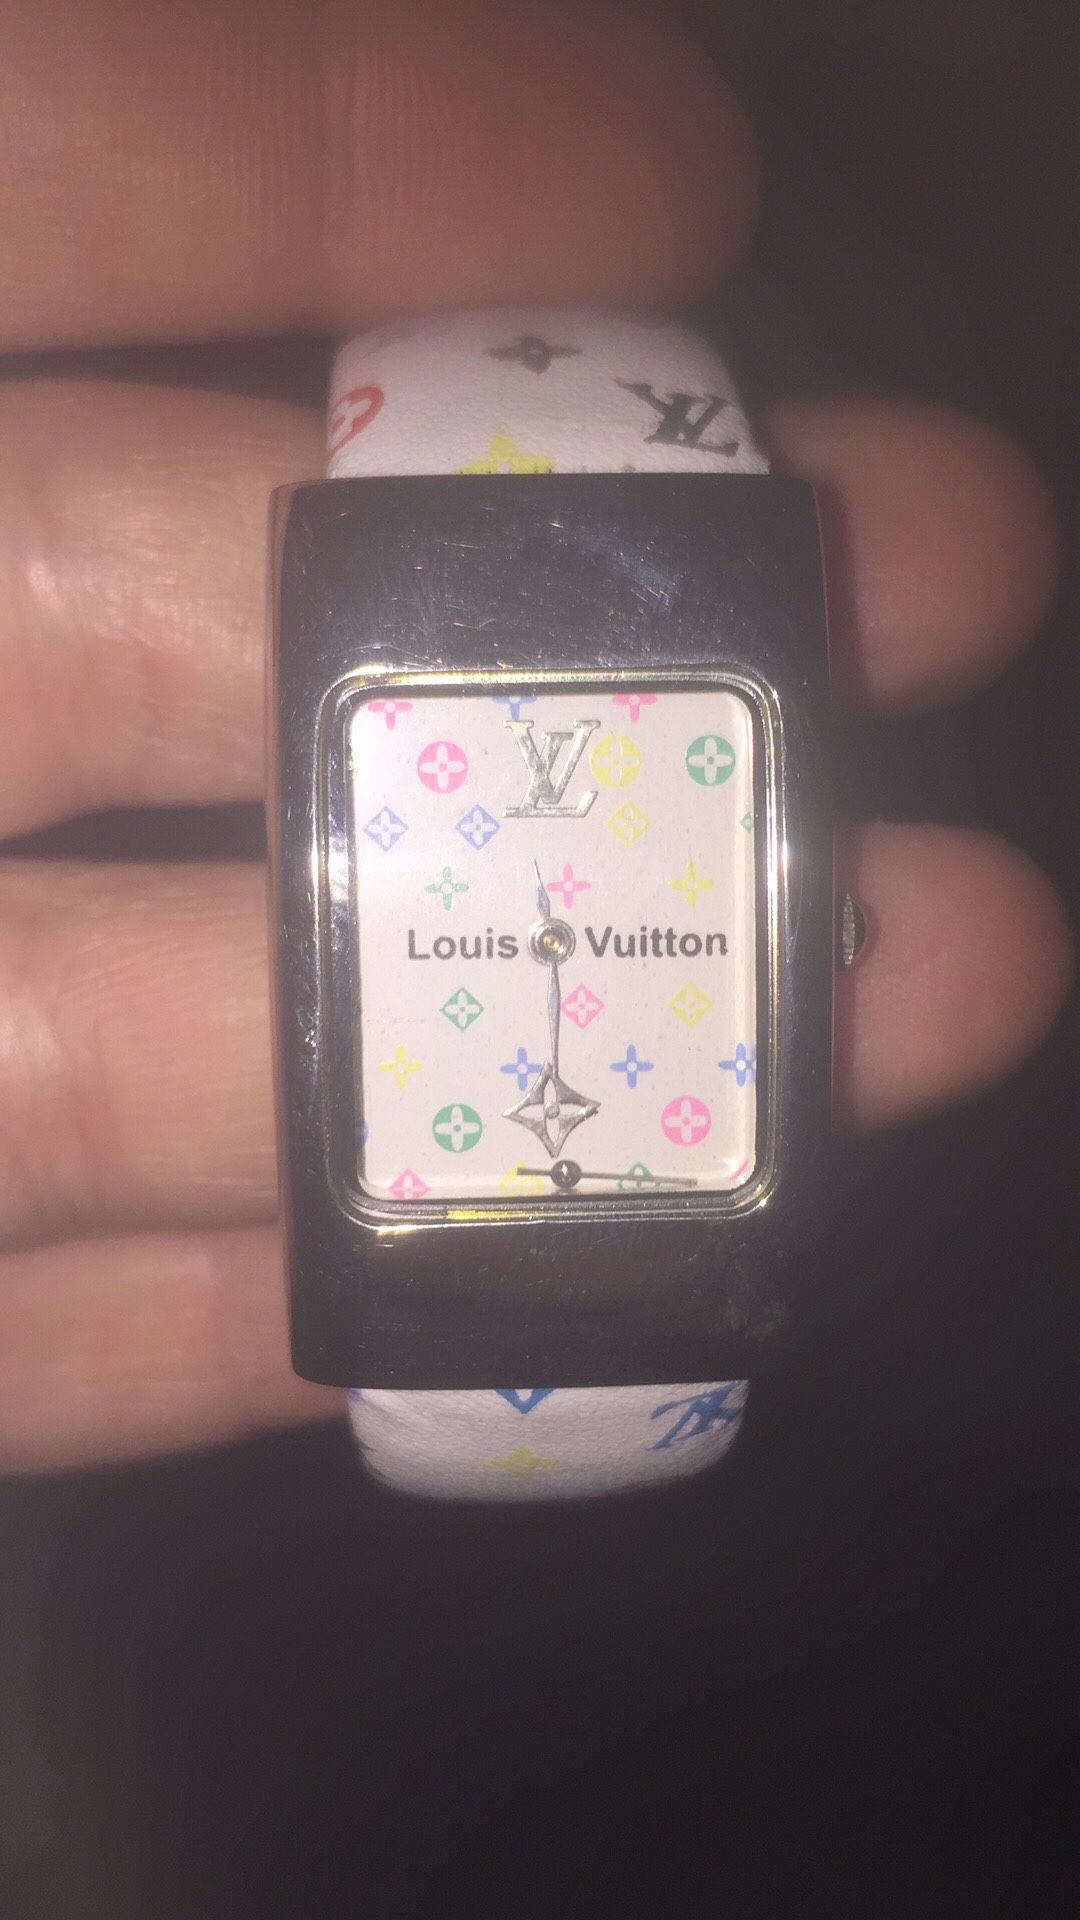 2023 NEW Louis Vuitton 8 Watch Case for Sale in Miami, FL - OfferUp